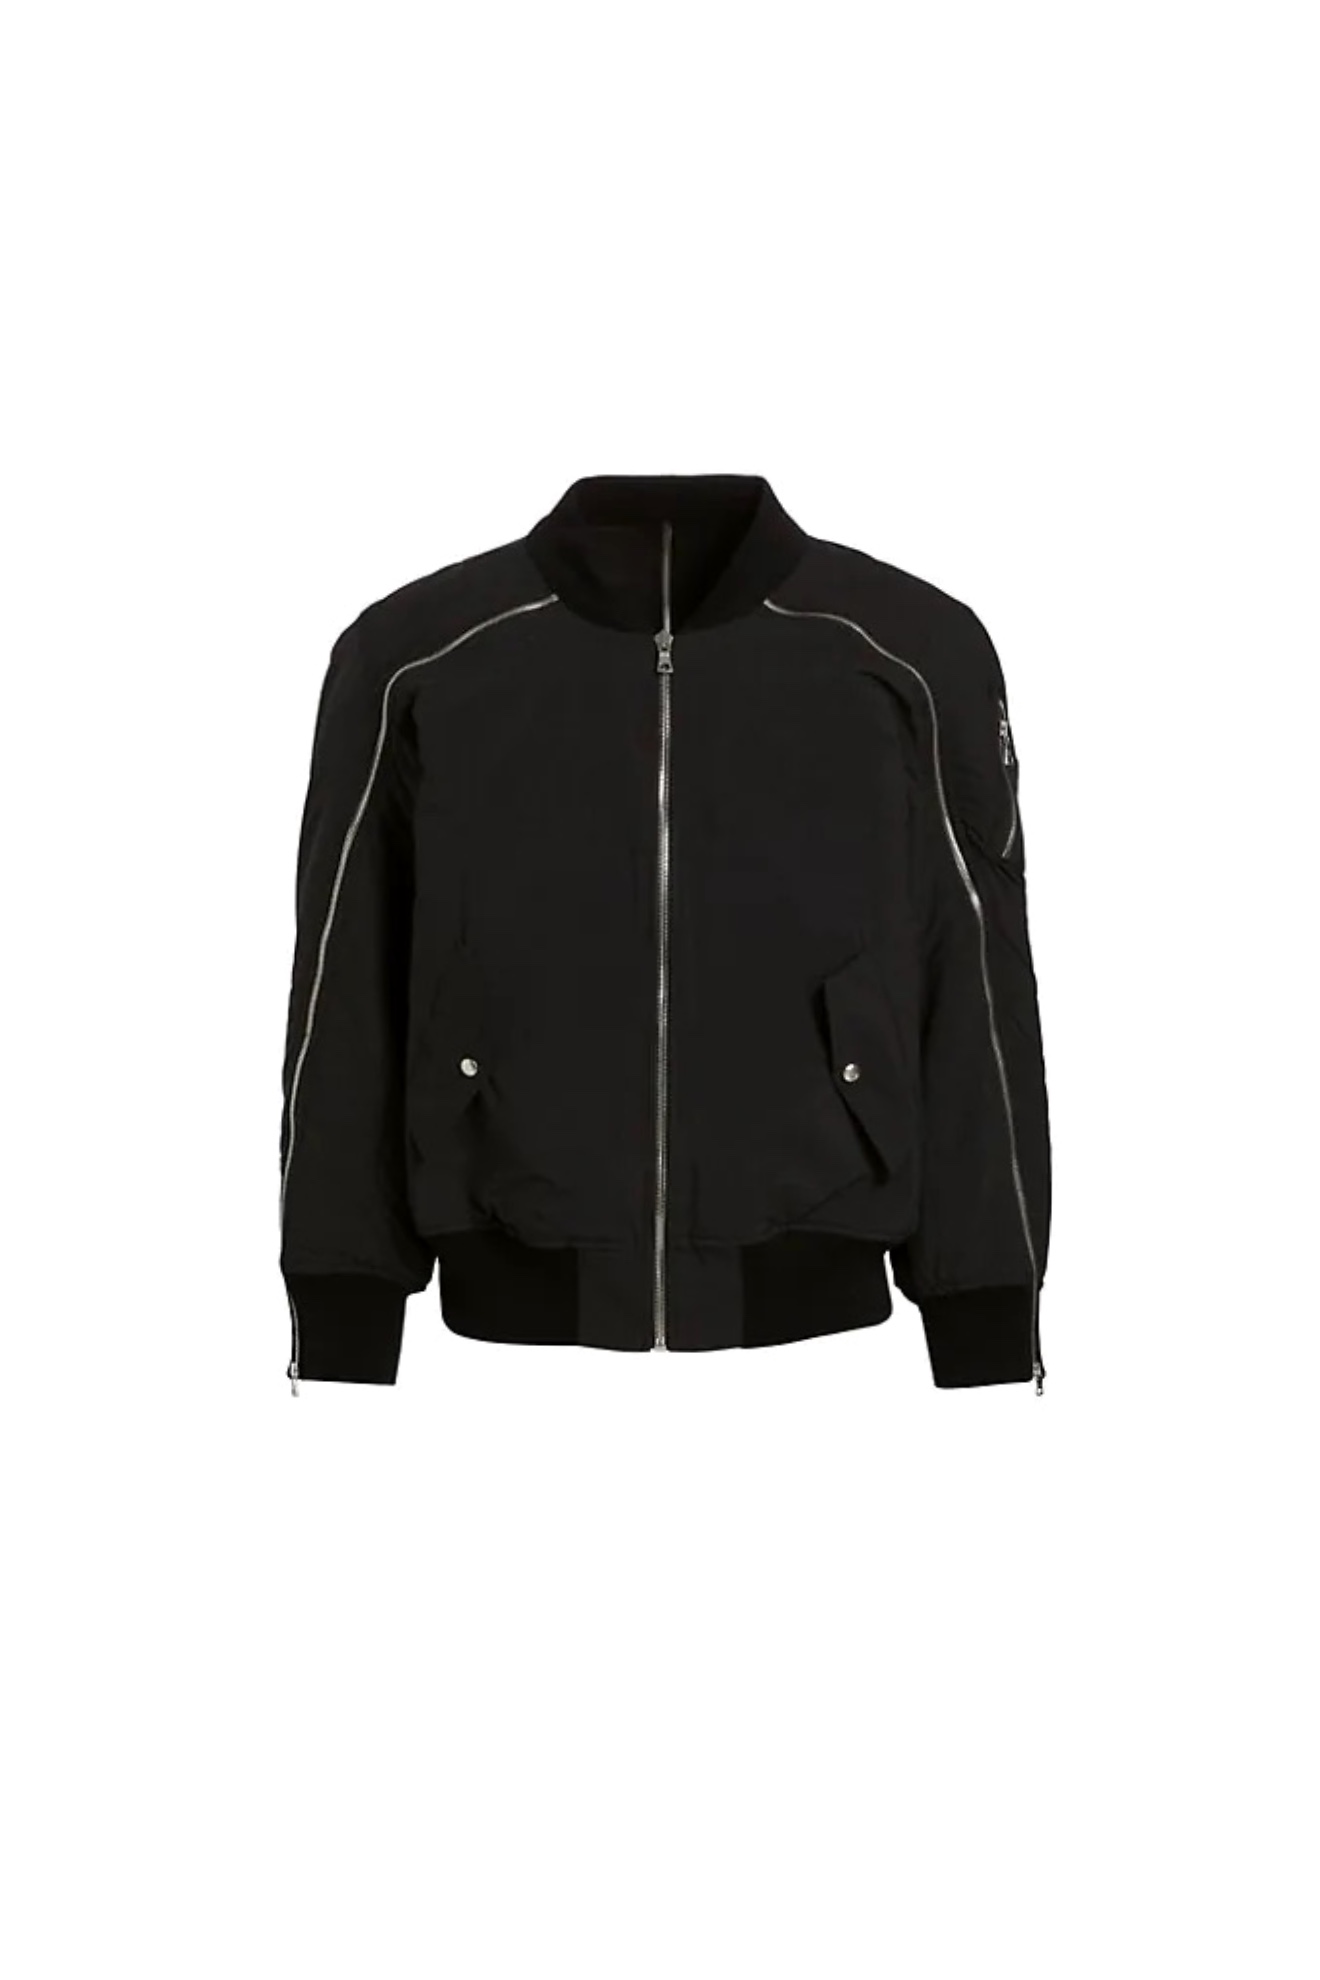 RtA Zipper Bomber Jacket - Bomber style jacket with zipper details black M